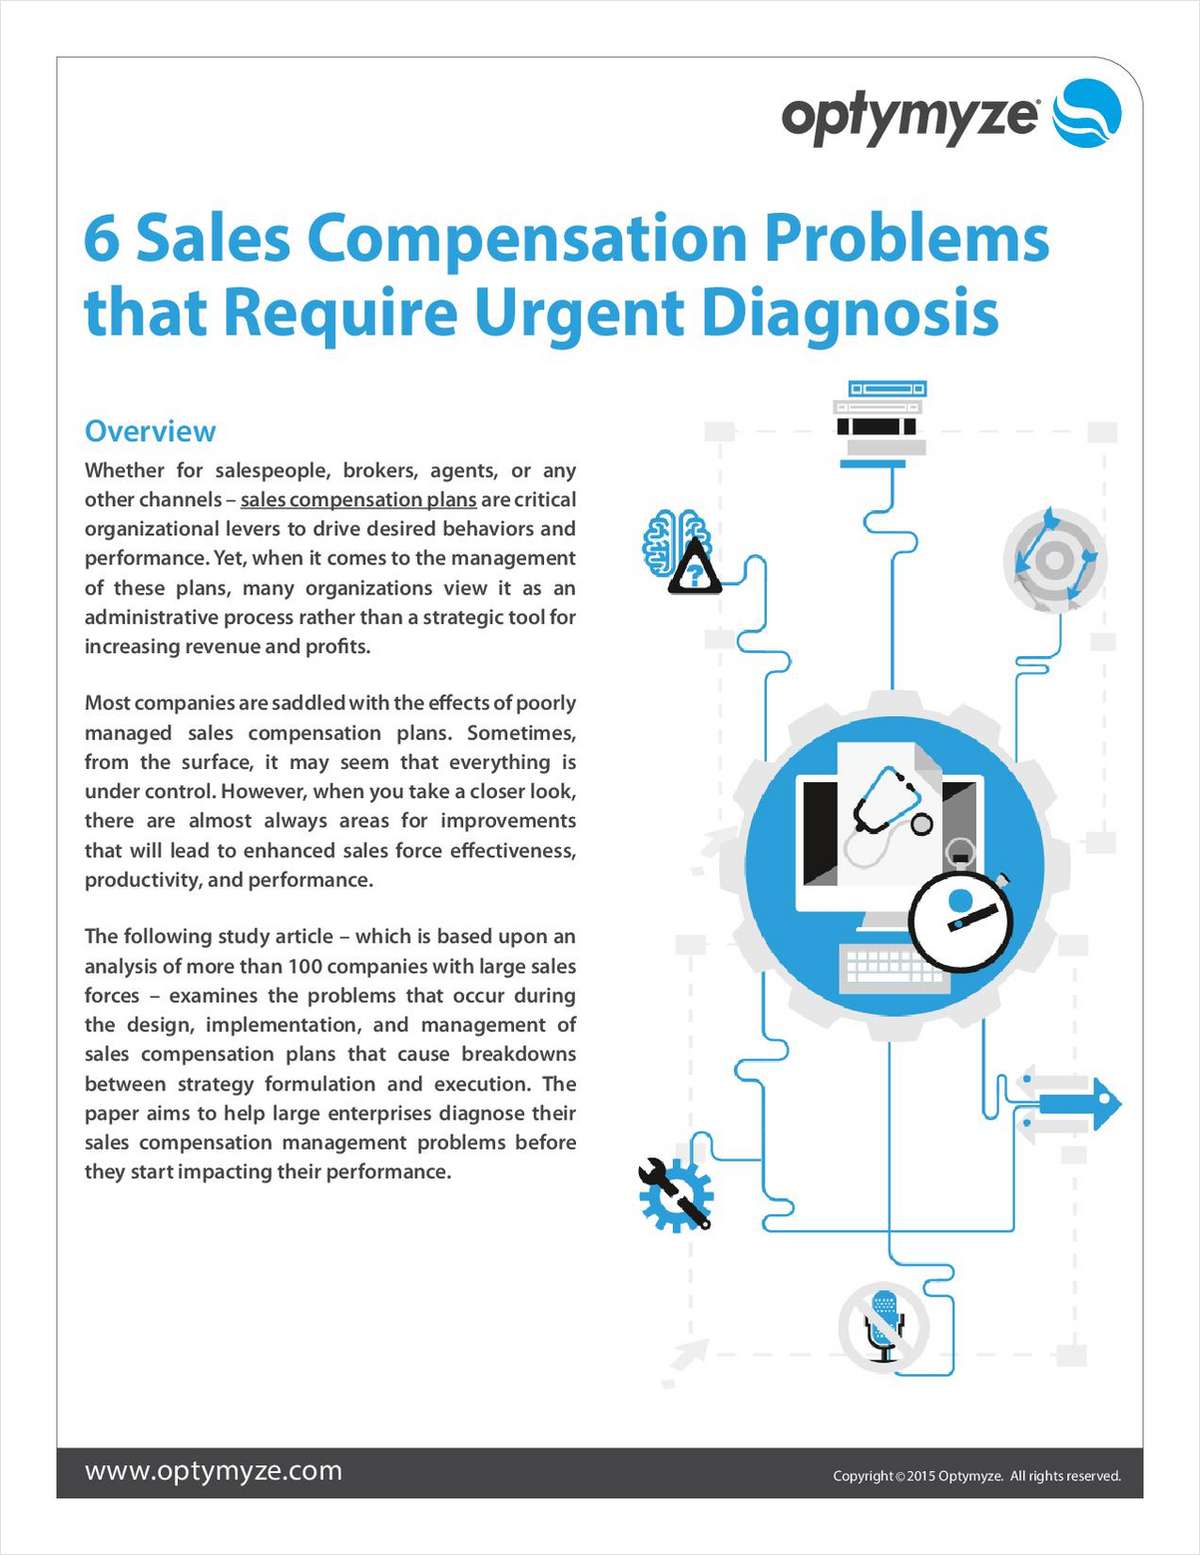 6 Sales Compensation Problems that Need Urgent Diagnosis